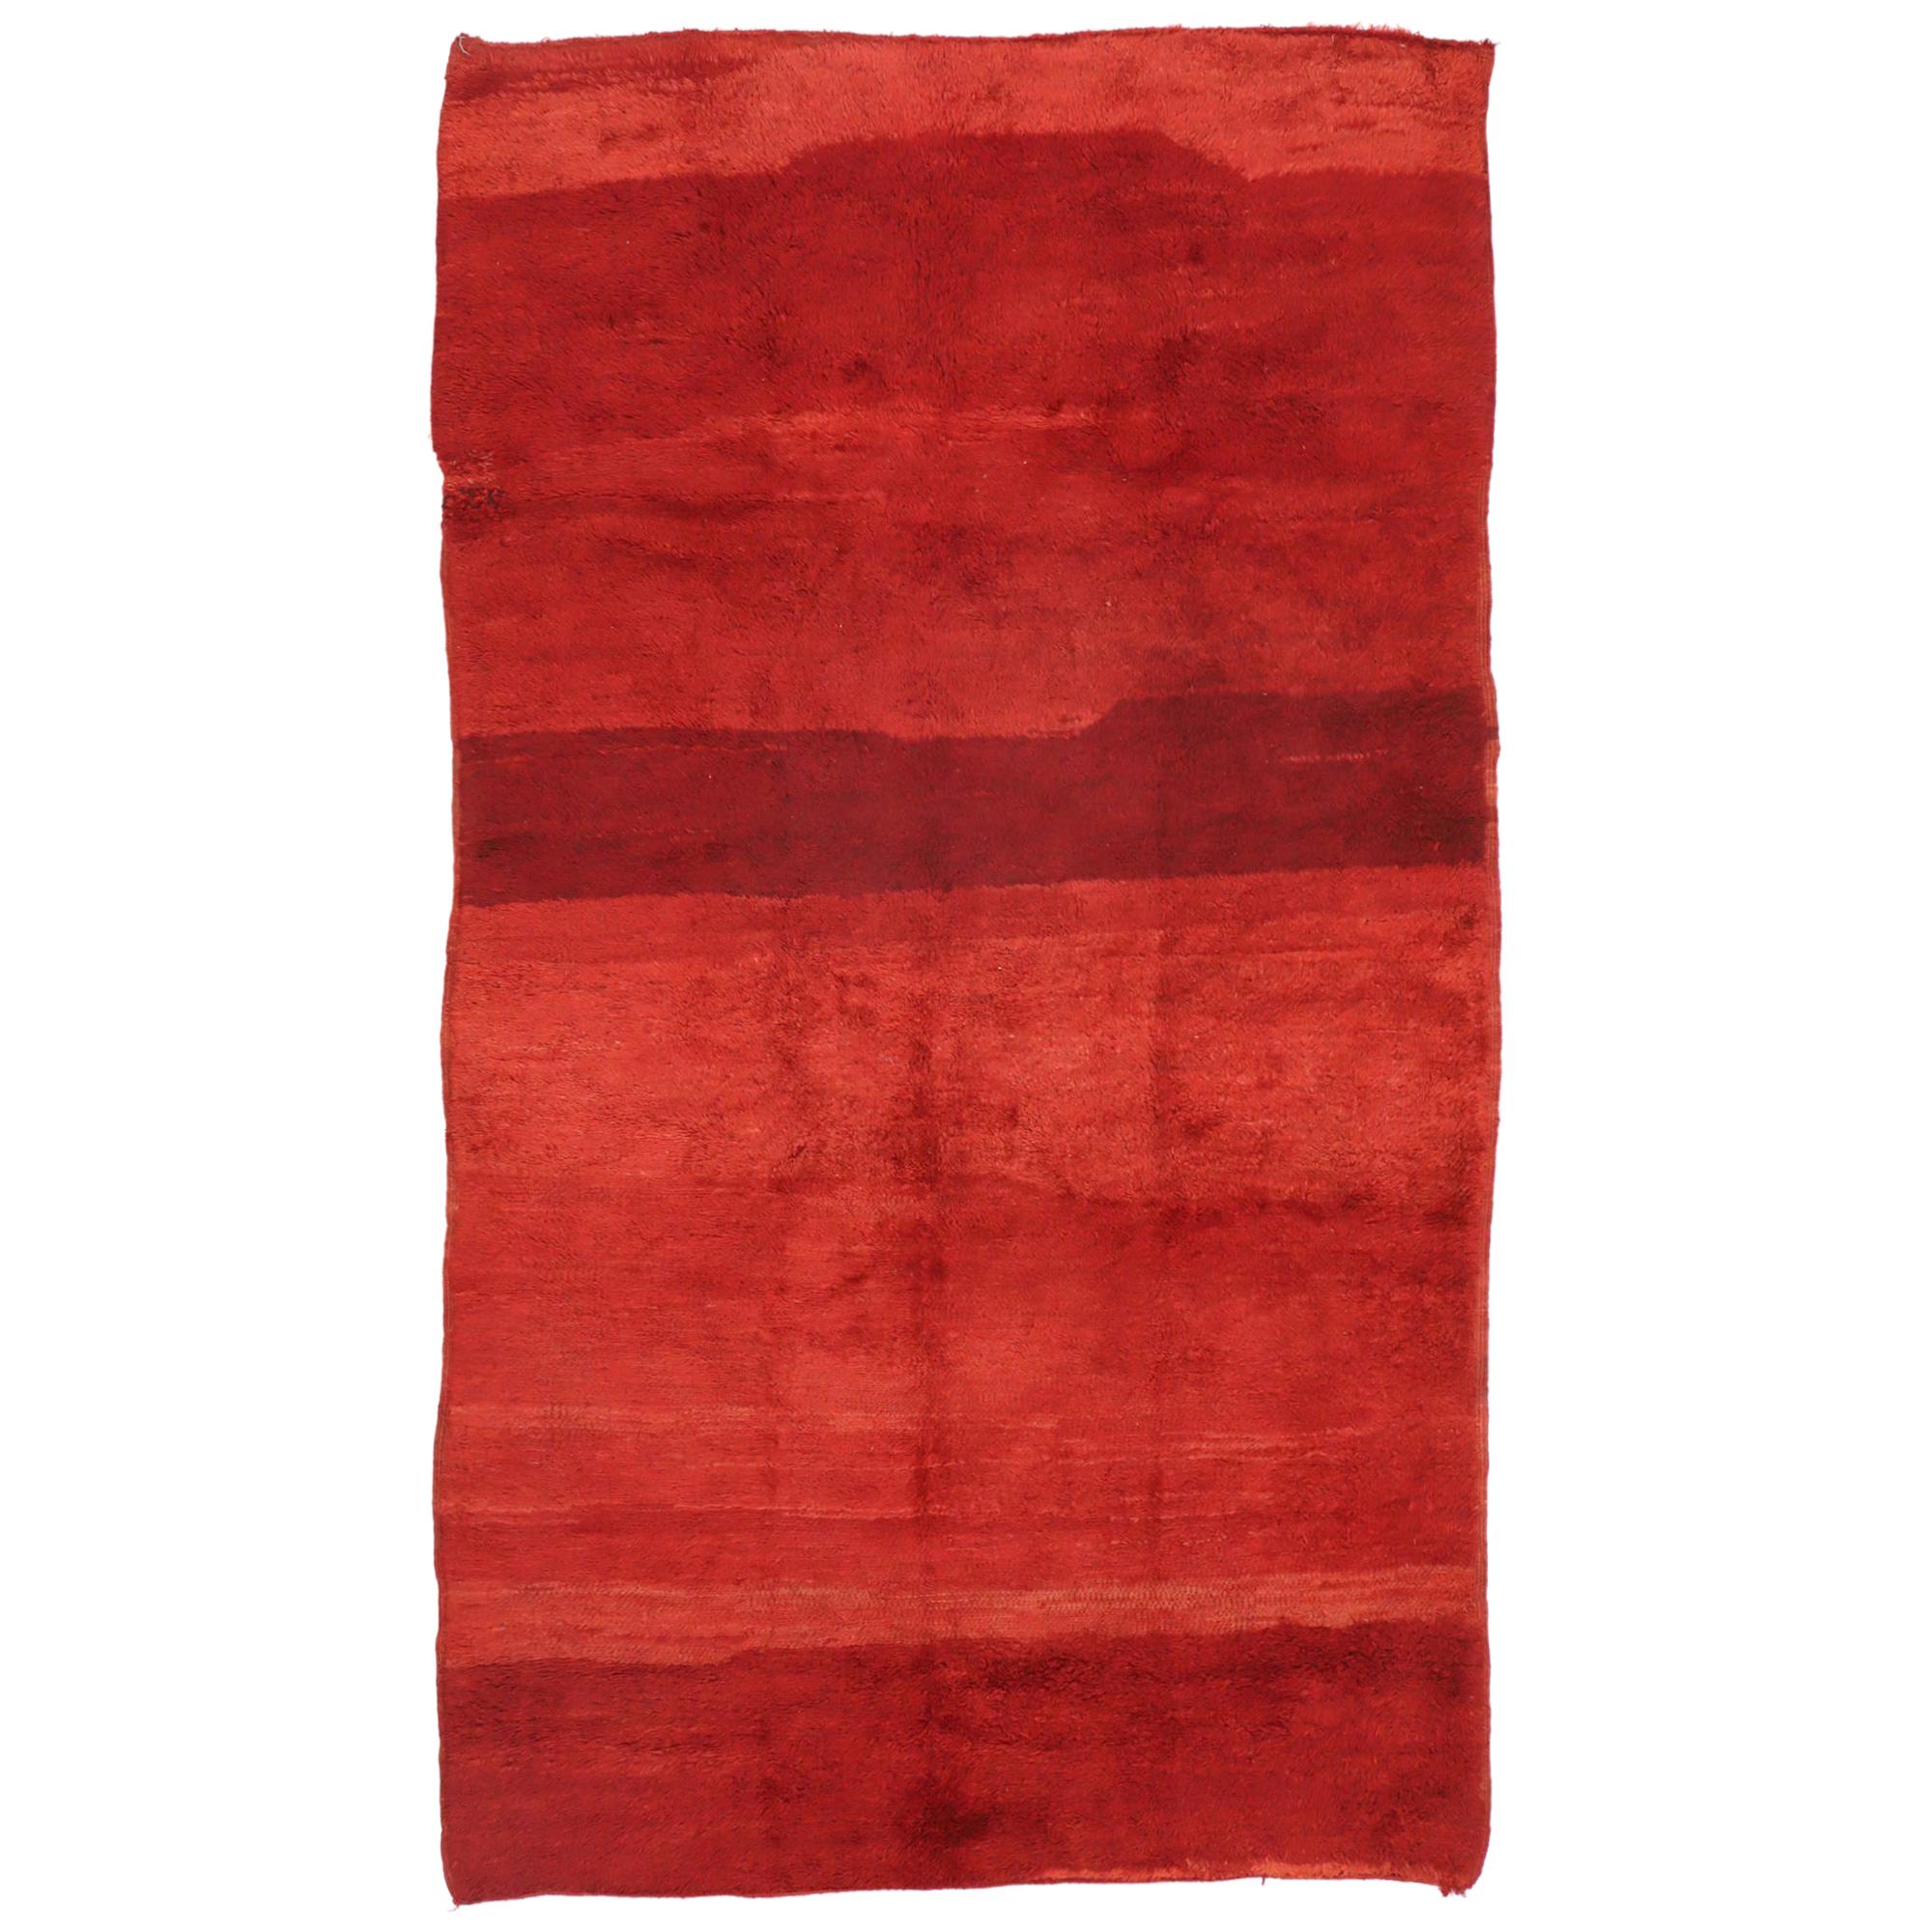 Vintage Red Beni Mrirt Moroccan Rug, Midcentury Boho Meets Expressionist Style For Sale